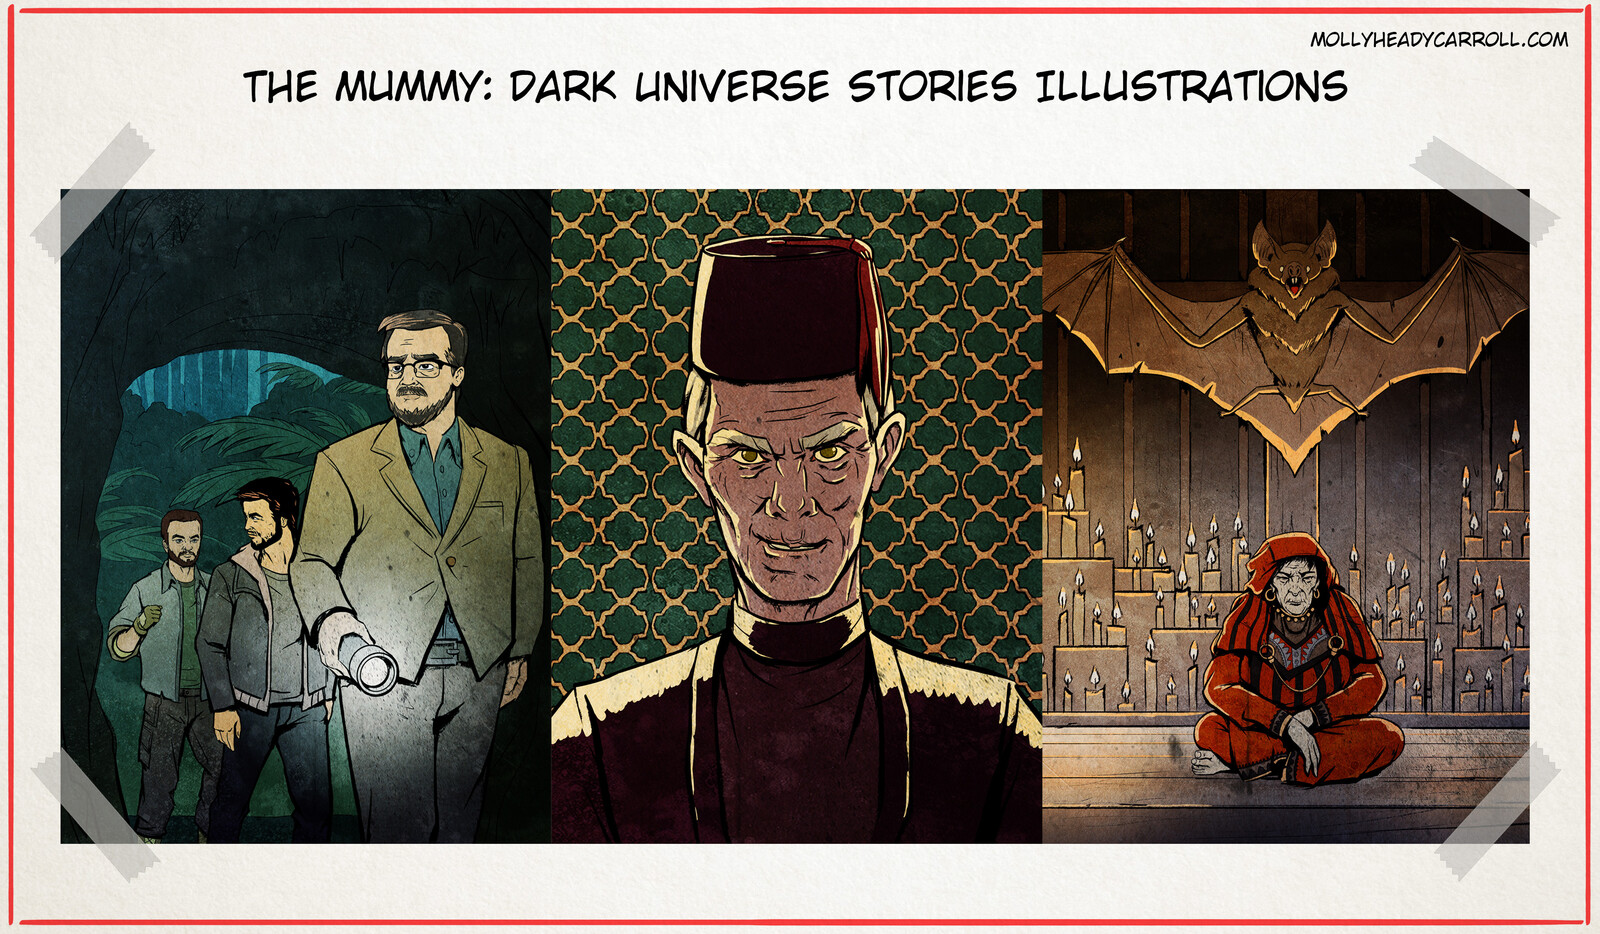 The Mummy: Dark Universe Stories Illustrations